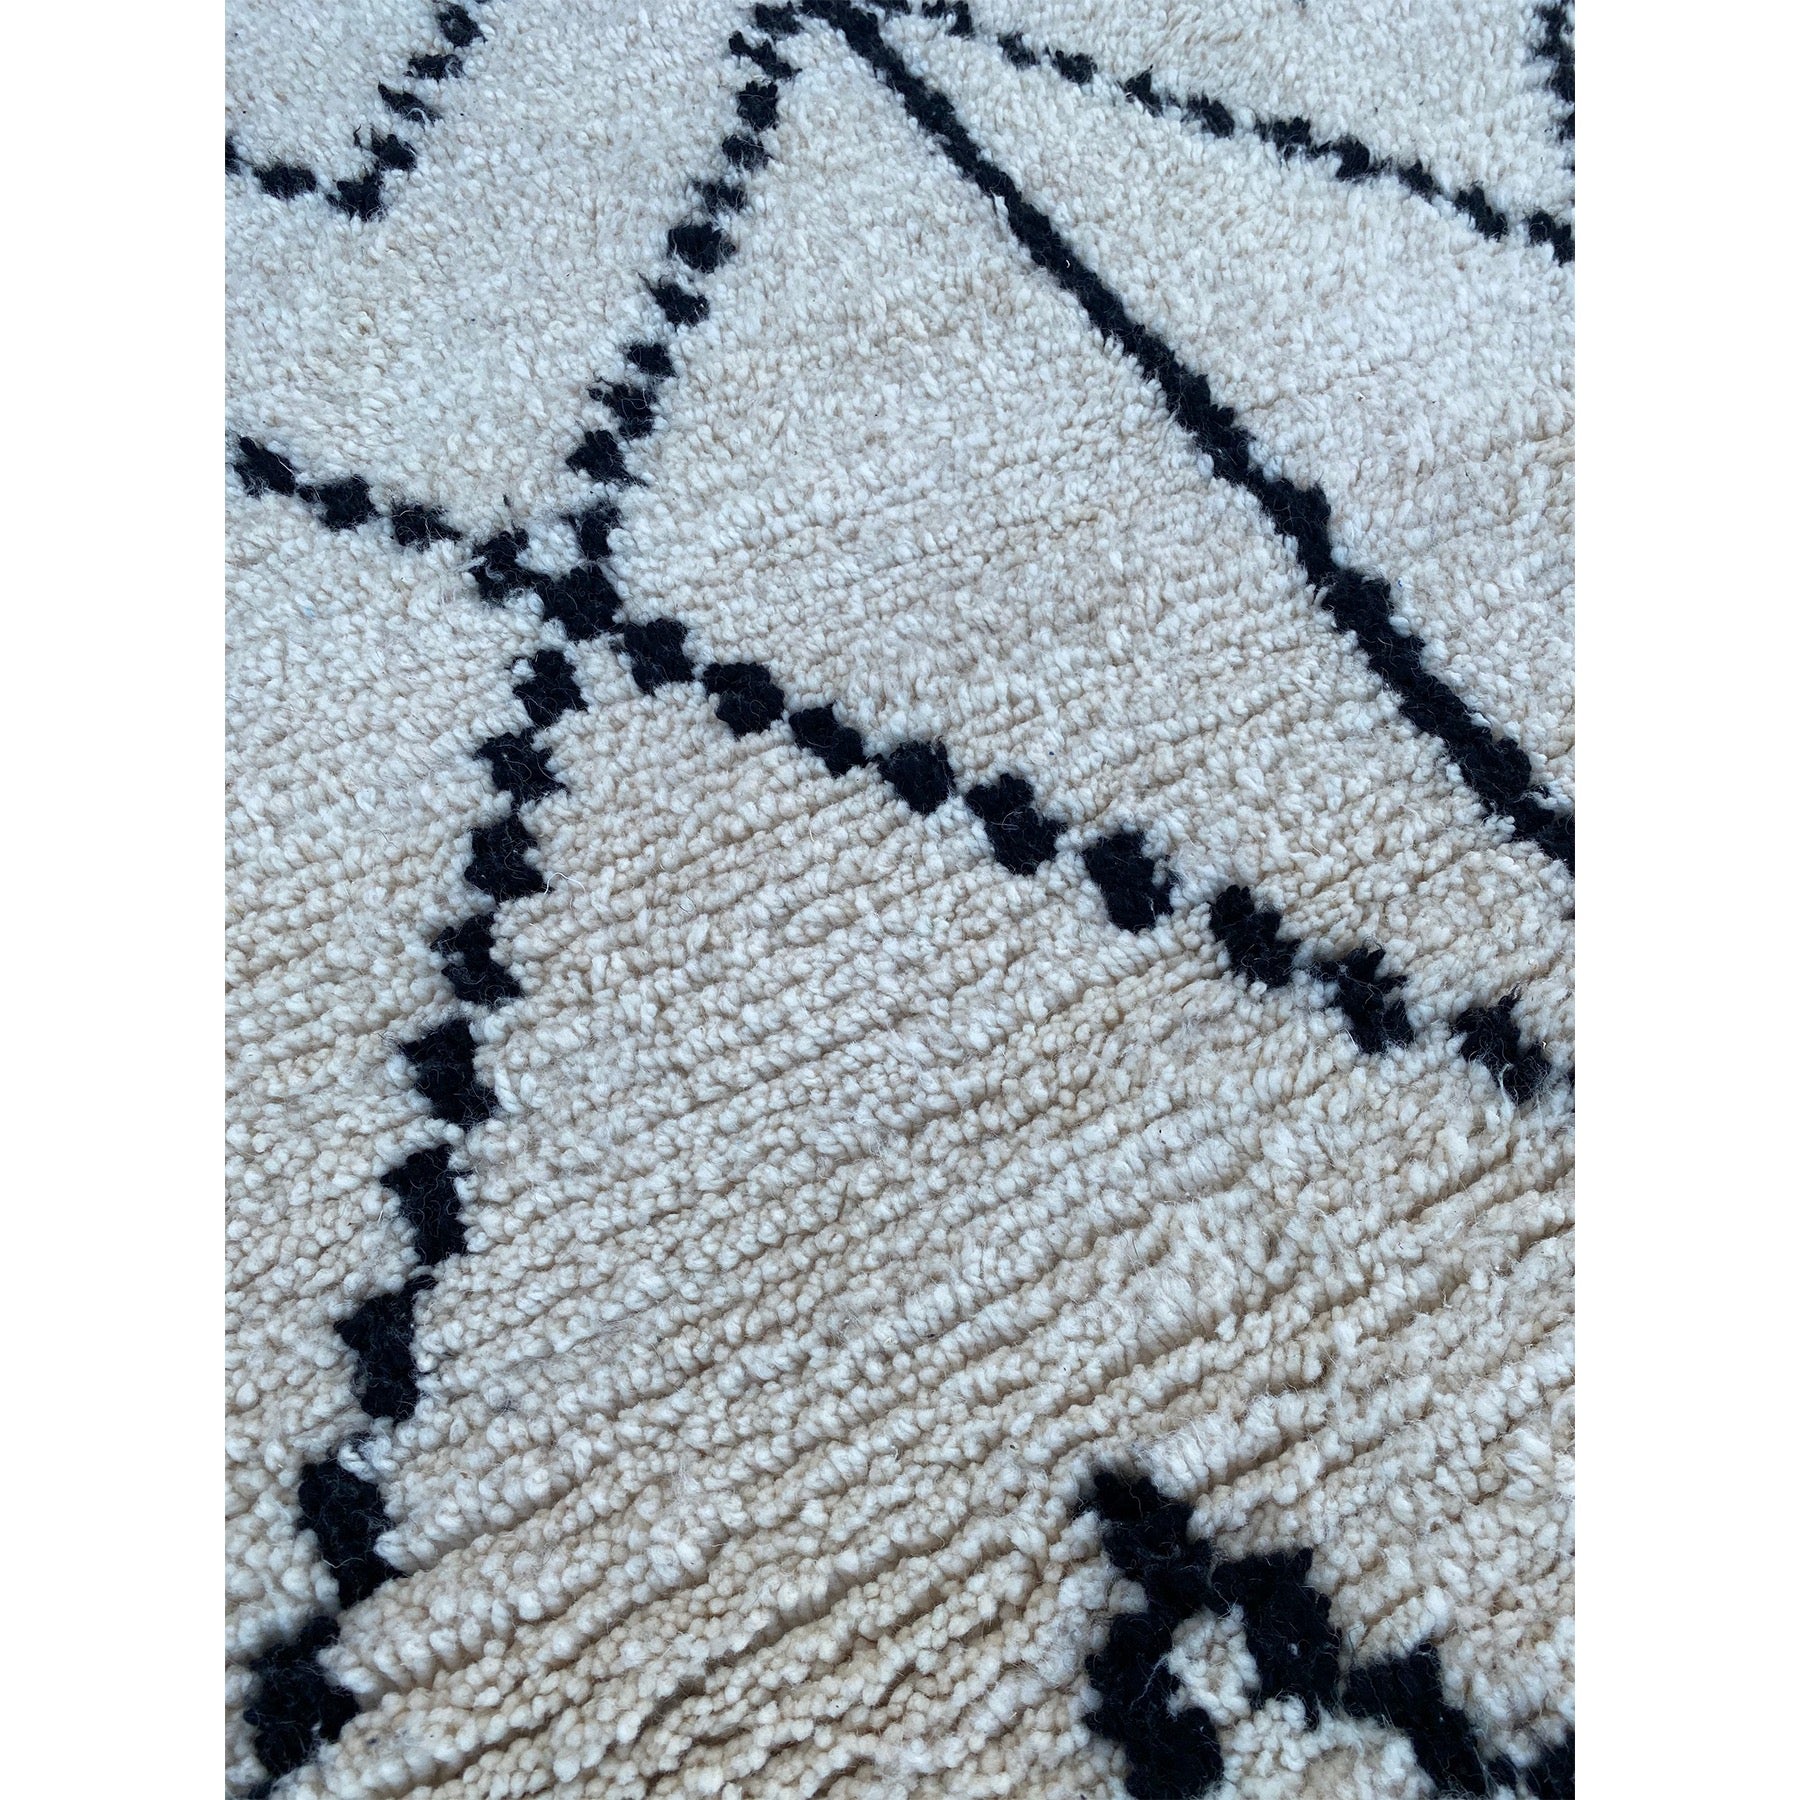 White and black geometric Beni Ourain inspired Moroccan rug - Kantara | Moroccan Rugs